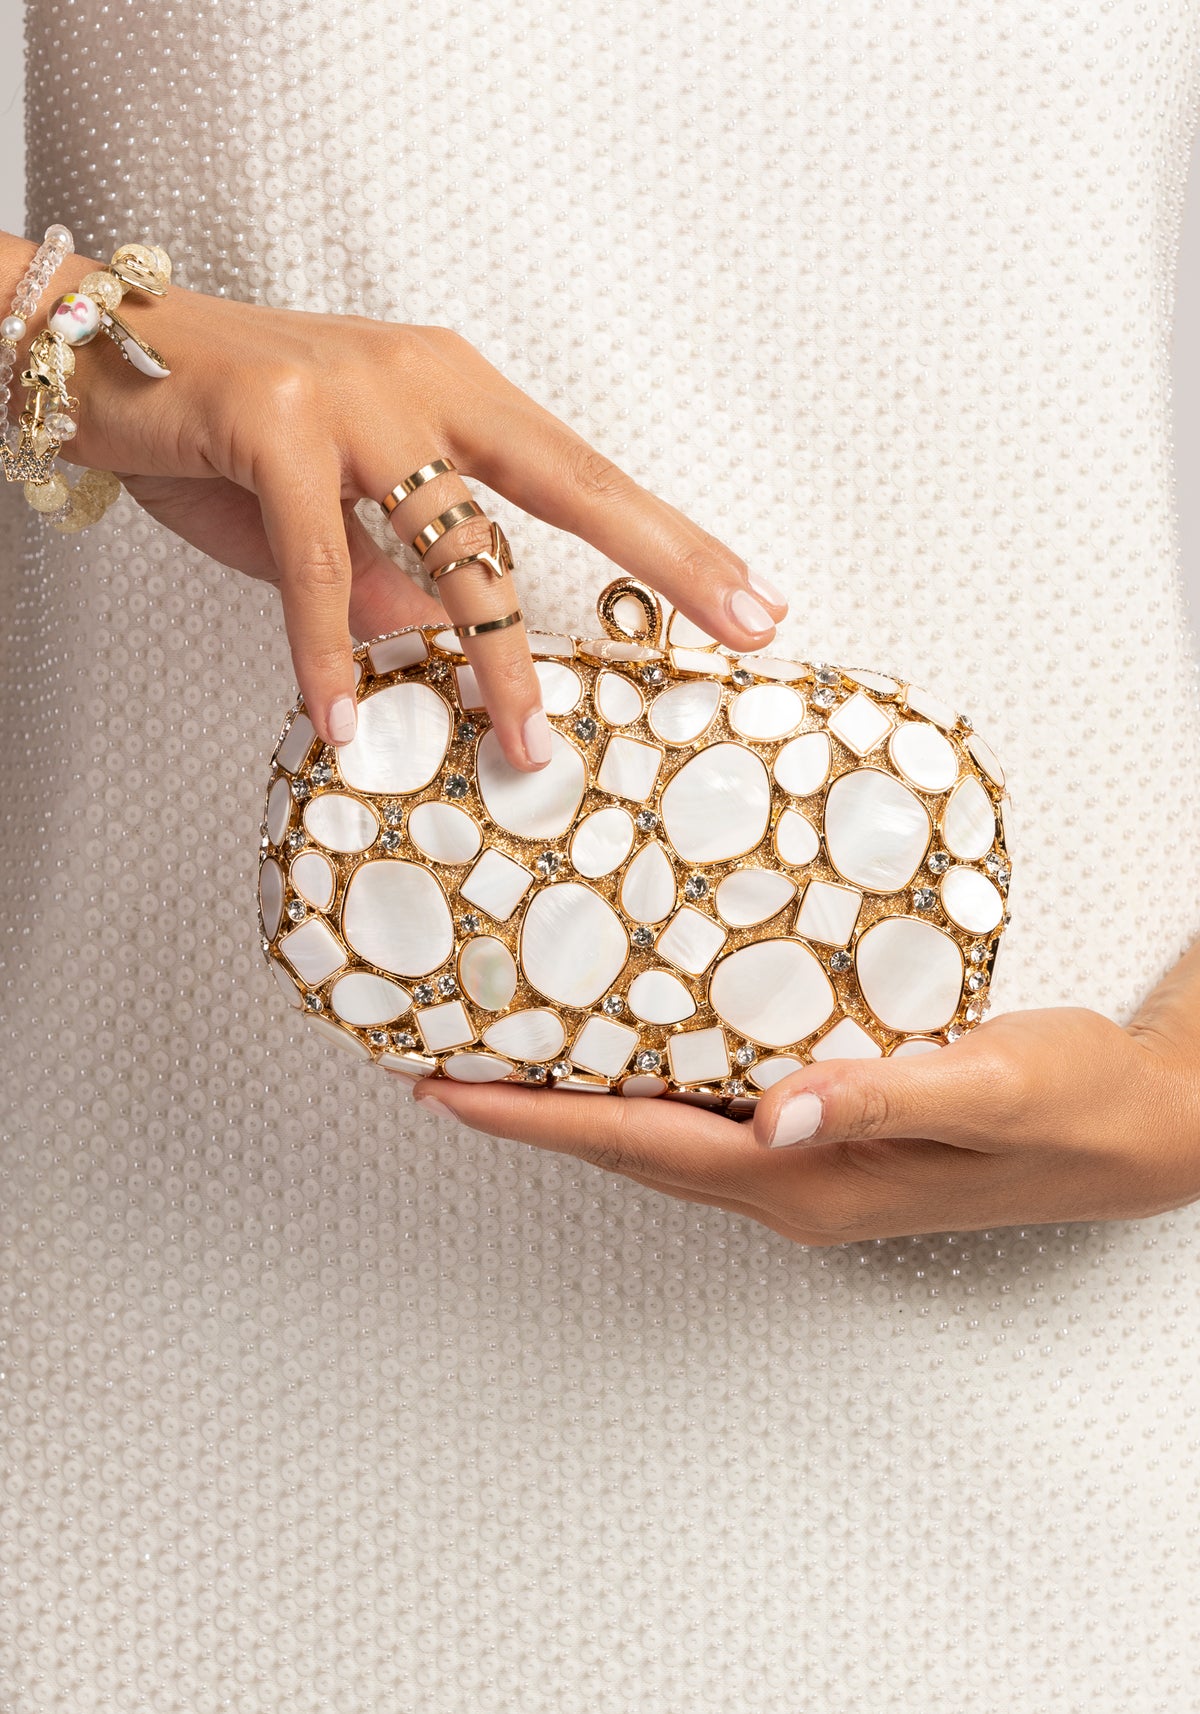 White and gold luxury handbag